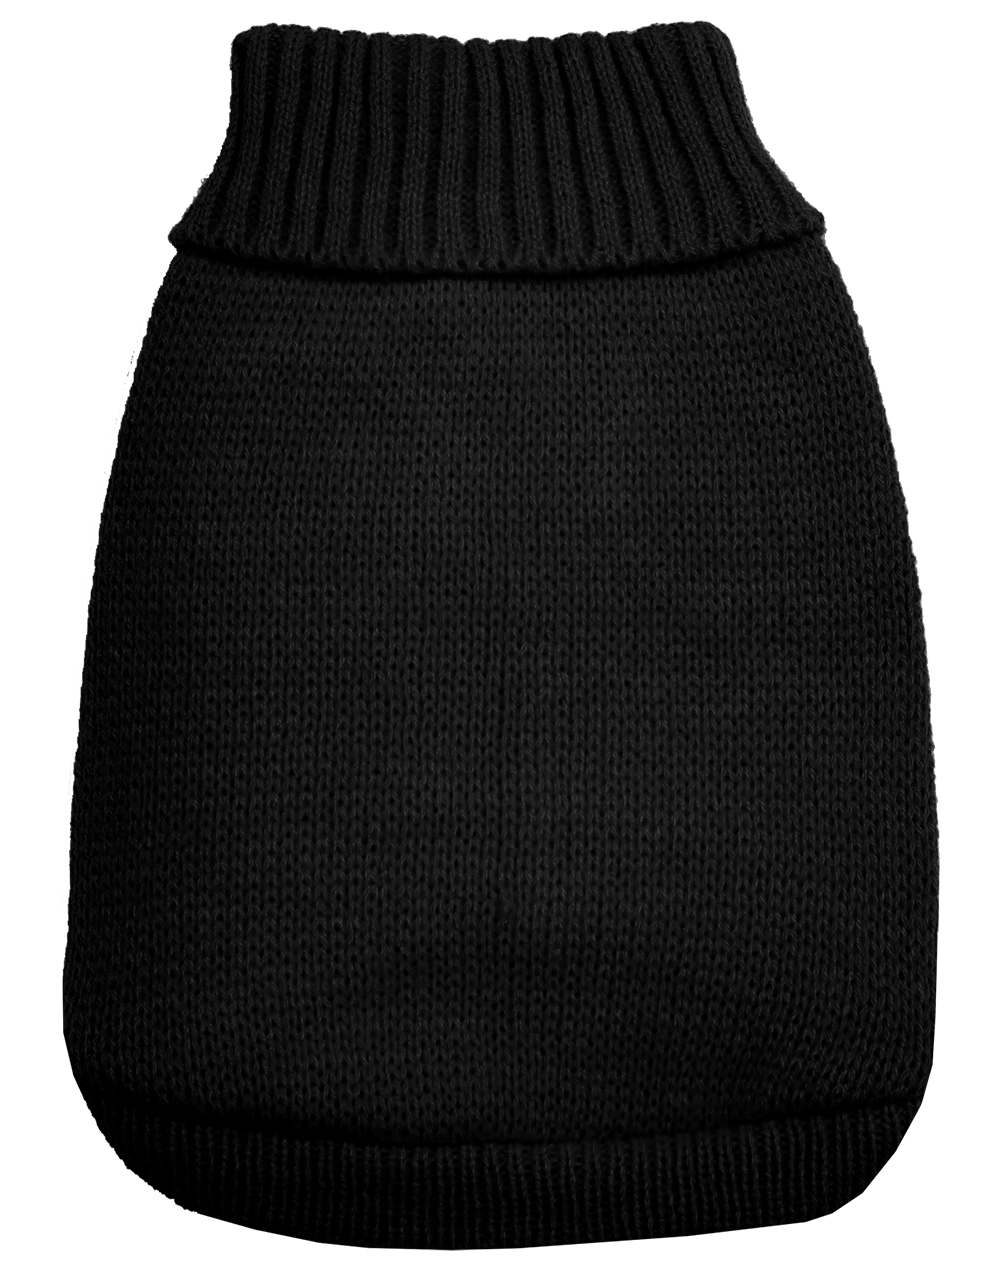 Knit Pet Sweater Black Size Medium